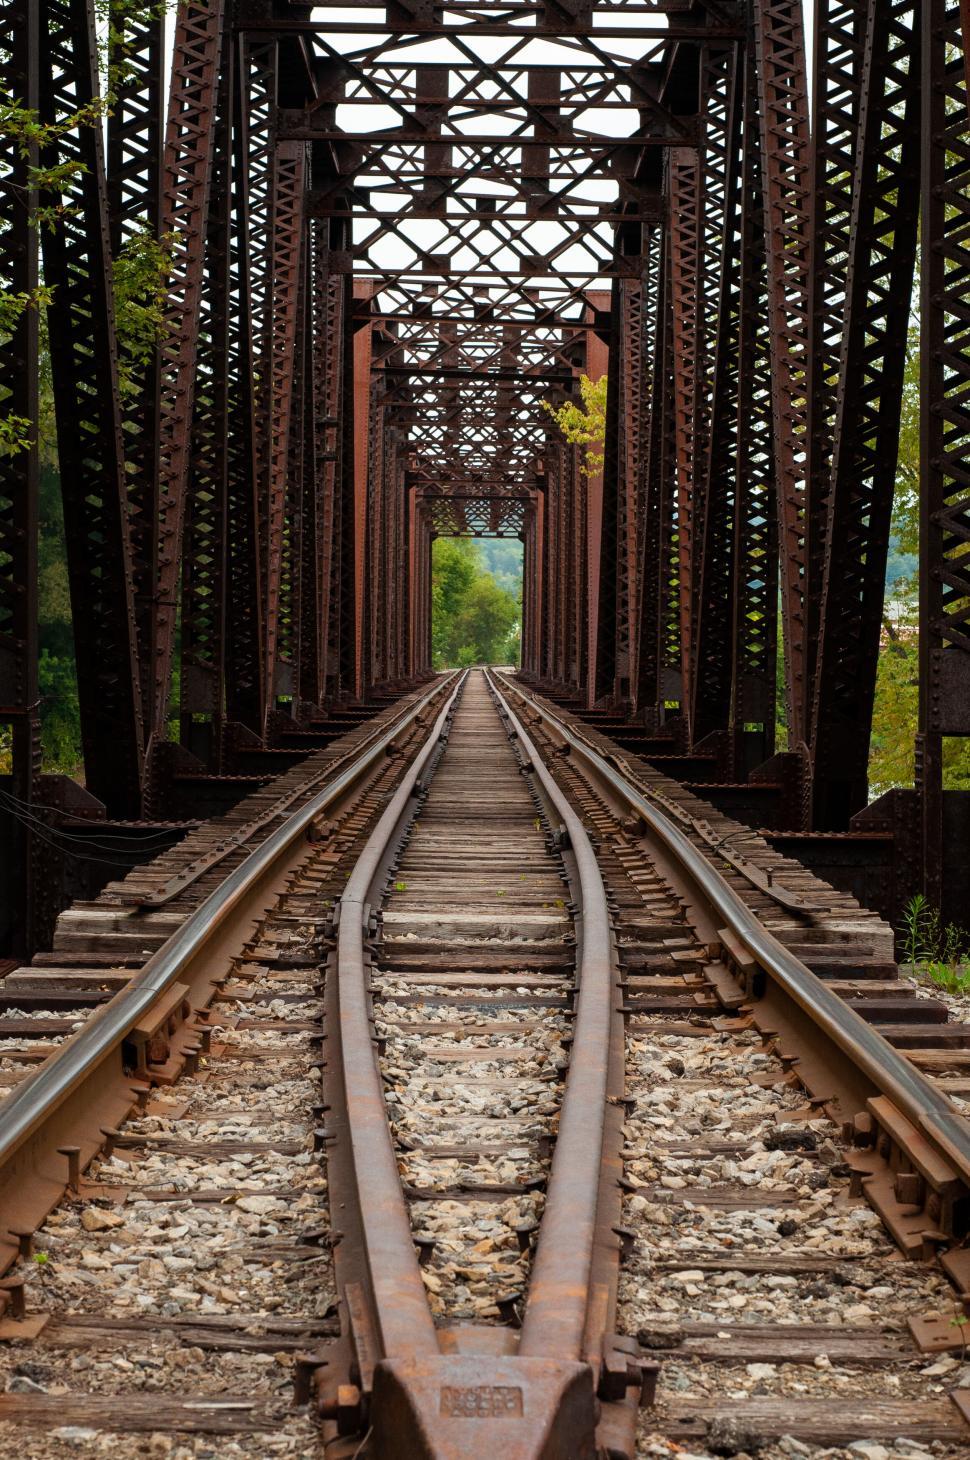 Free Image of Old Iron Railroad Bridge Symmetry 